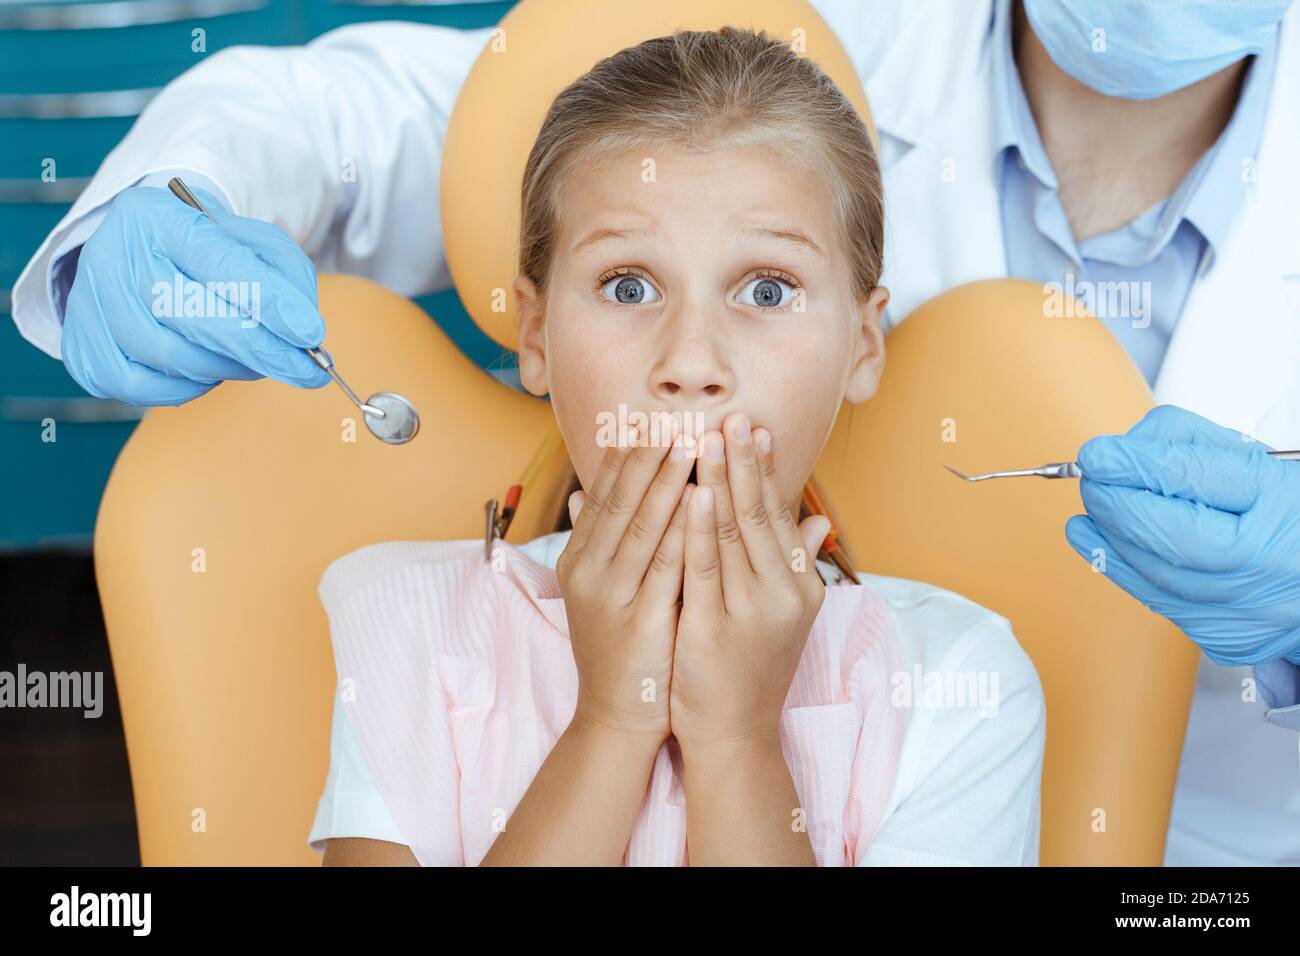 Work with children, dental examination and orthodontics Stock Photo